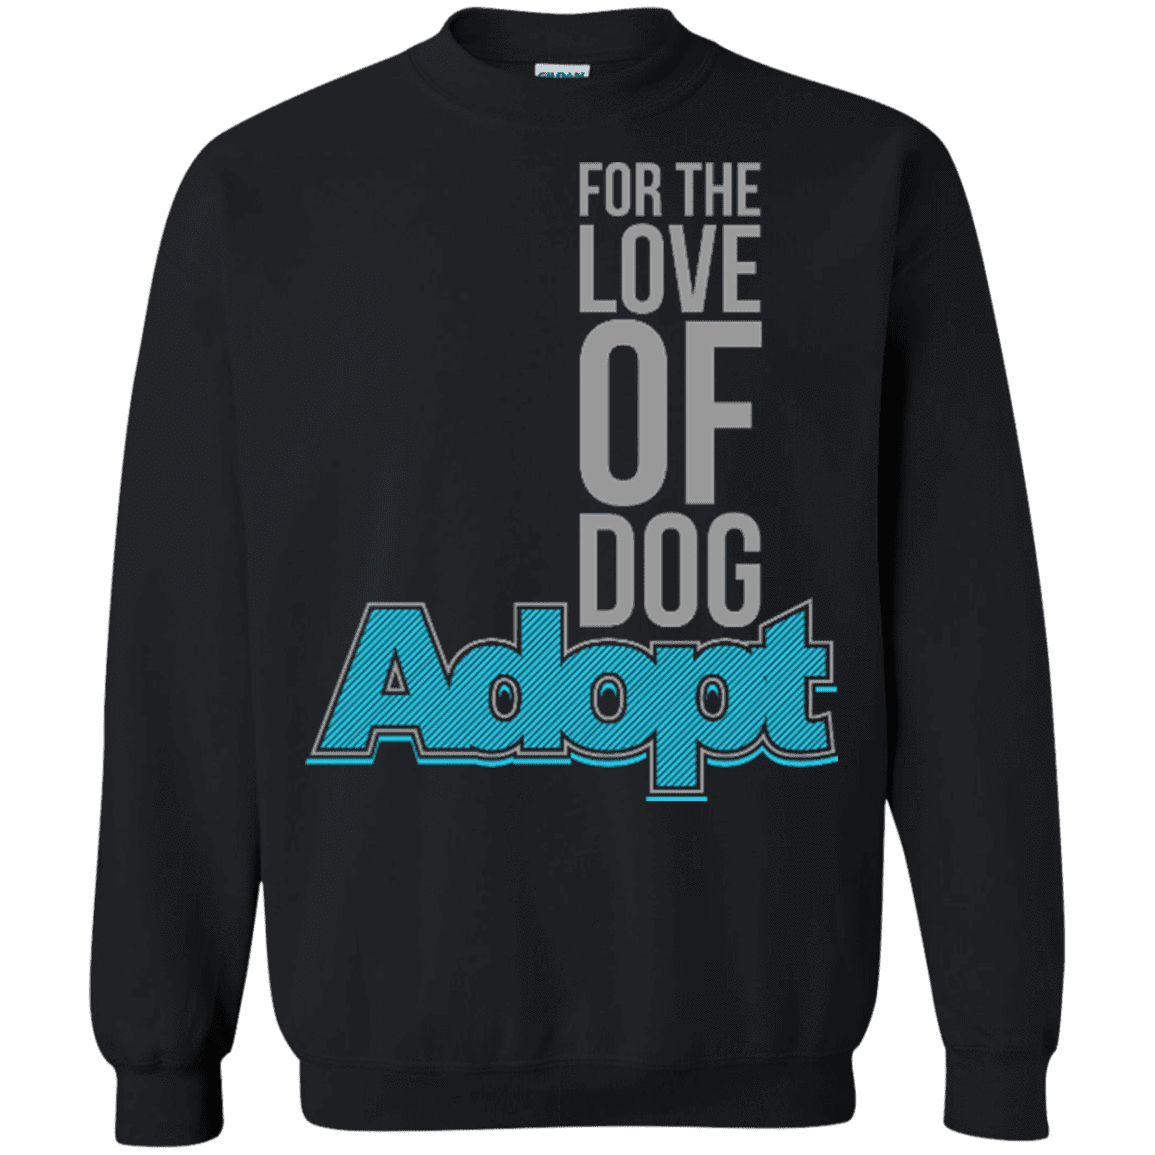 For The Love Of Dog Adopt - Sweatshirt.